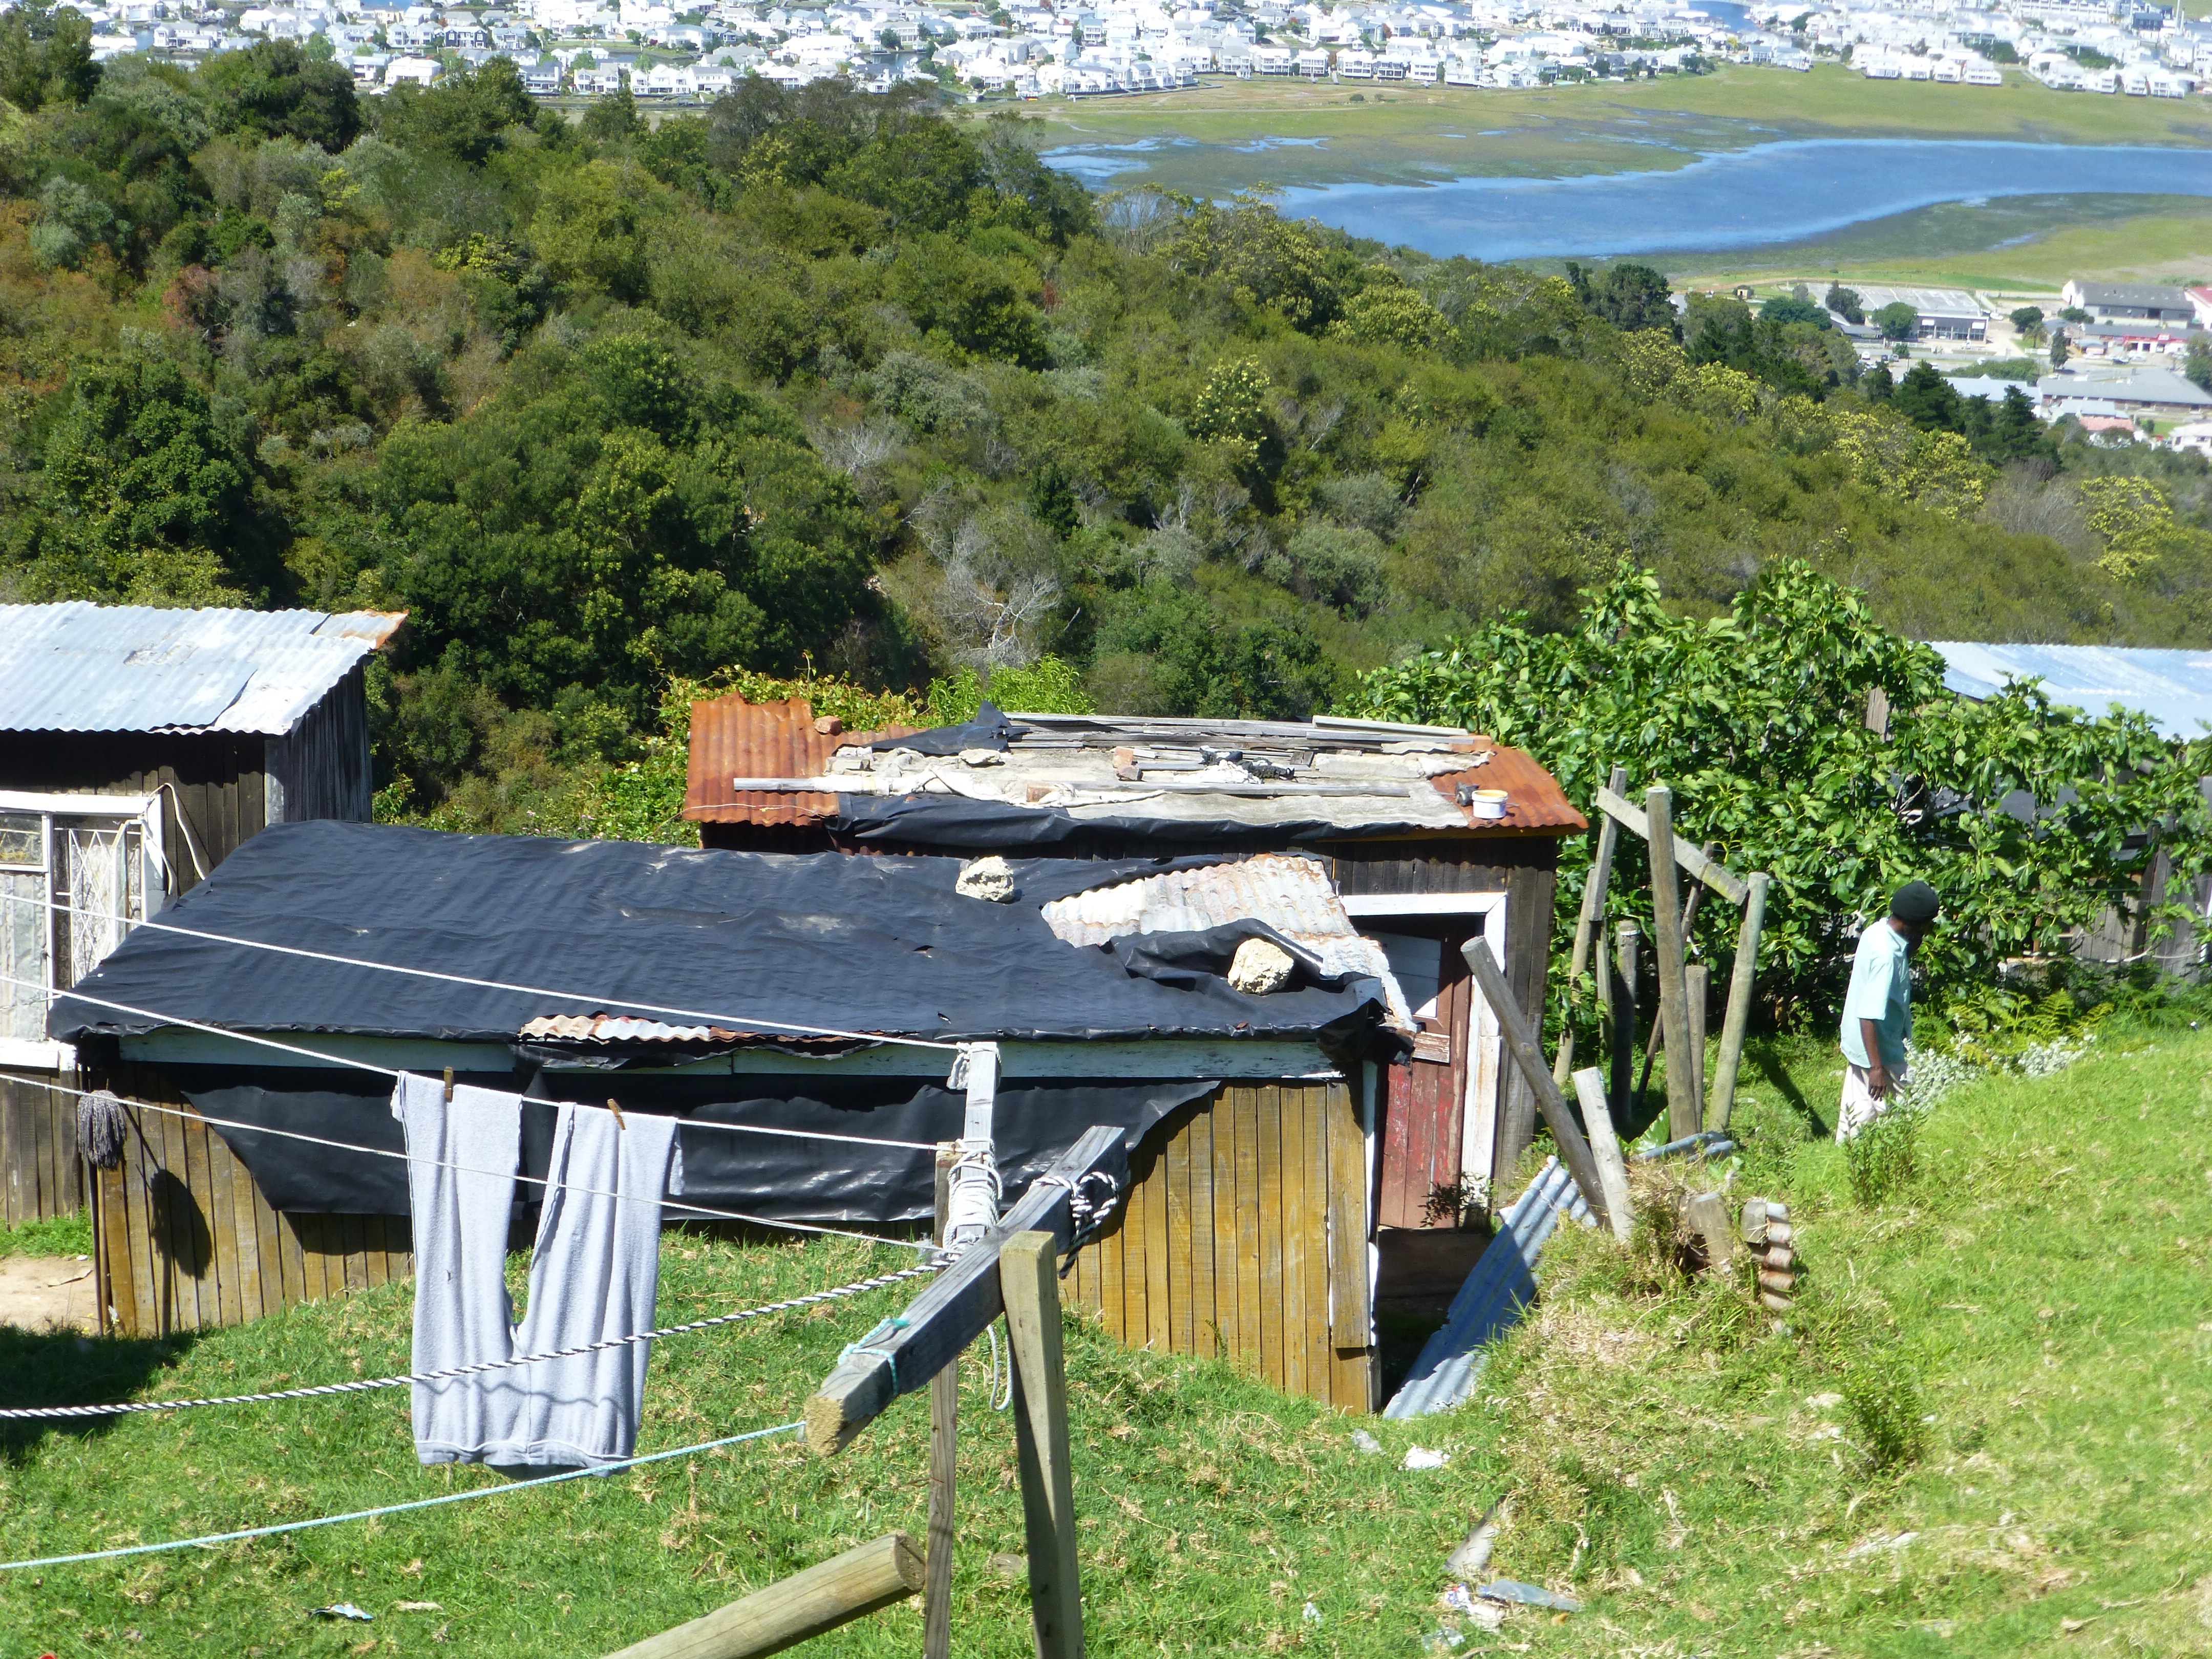 Township Toer in Knysna Zuid Afrika